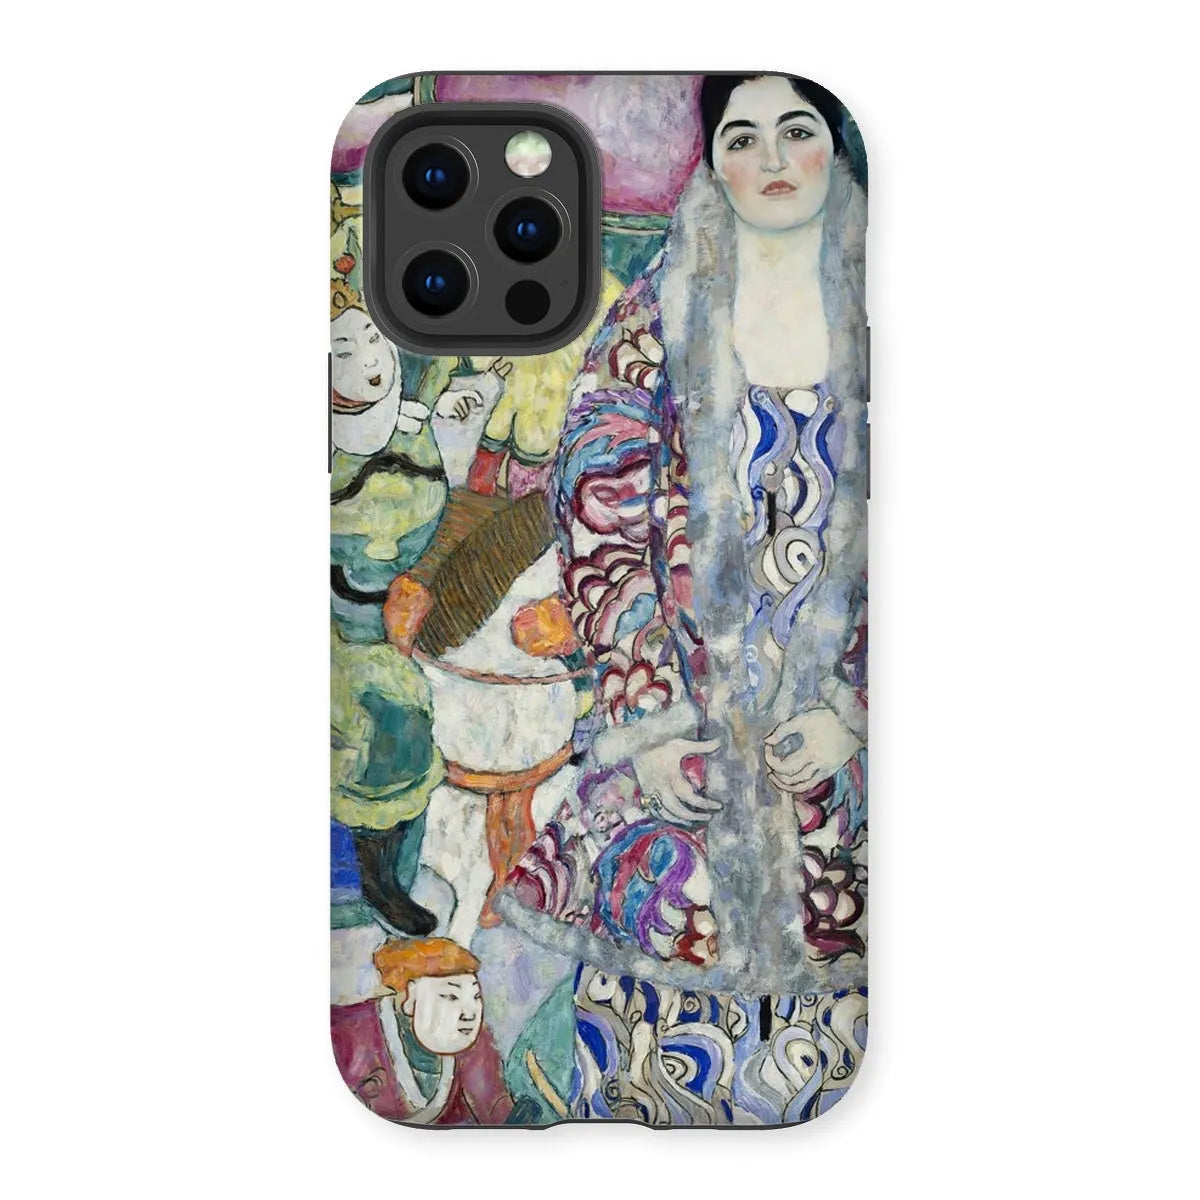 Friederike Maria Beer - Viennese Art Phone Case - Gustav Klimt - Iphone 12 Pro / Matte - Mobile Phone Cases - Aesthetic